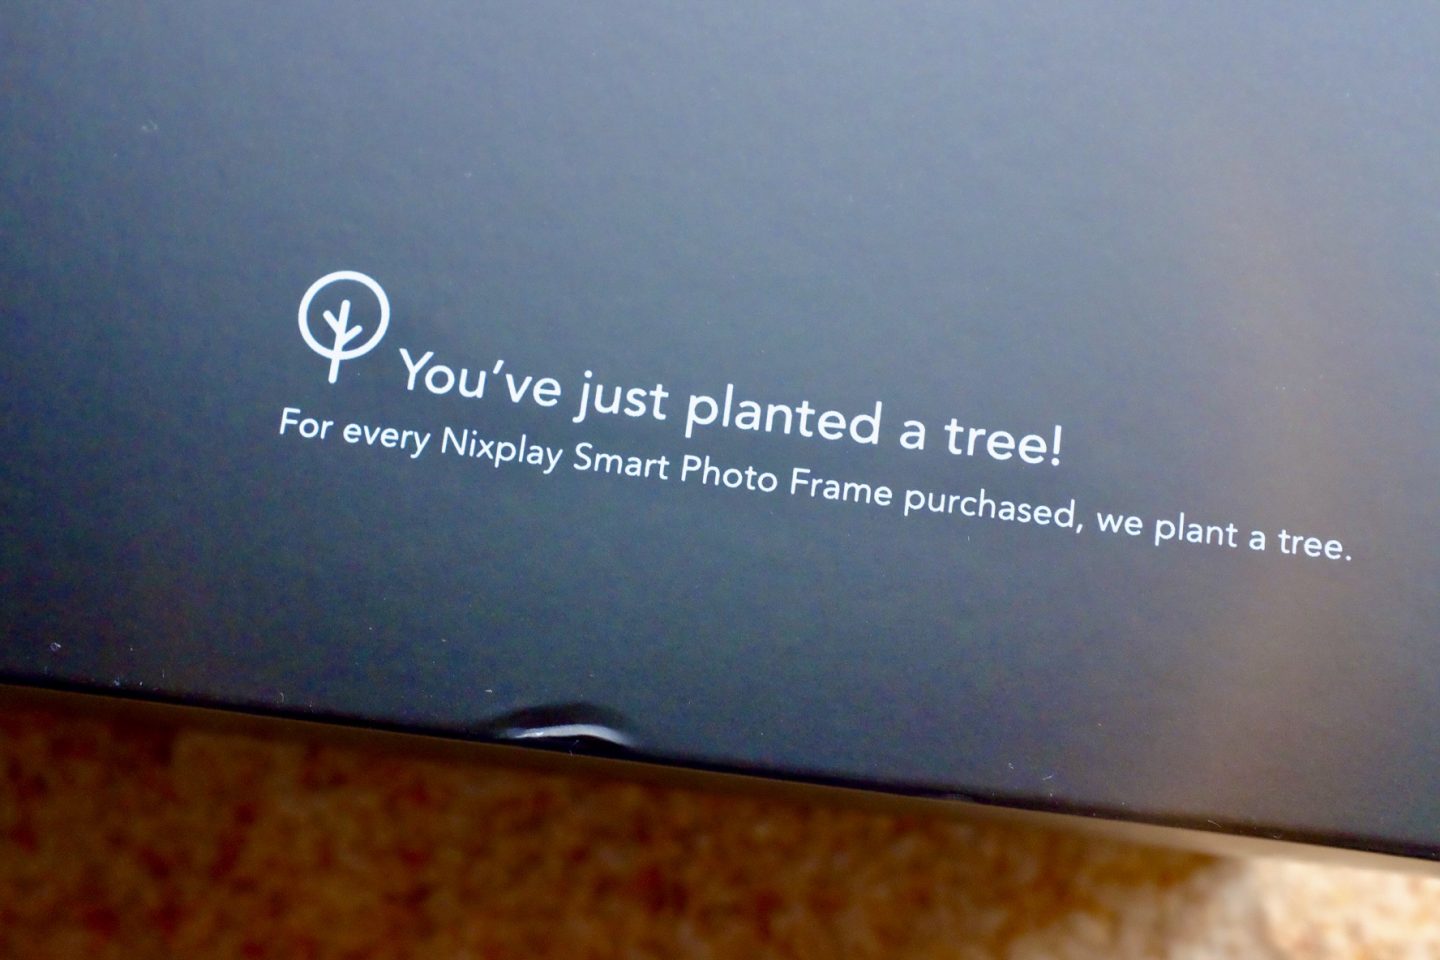 nixplay smart photo frame